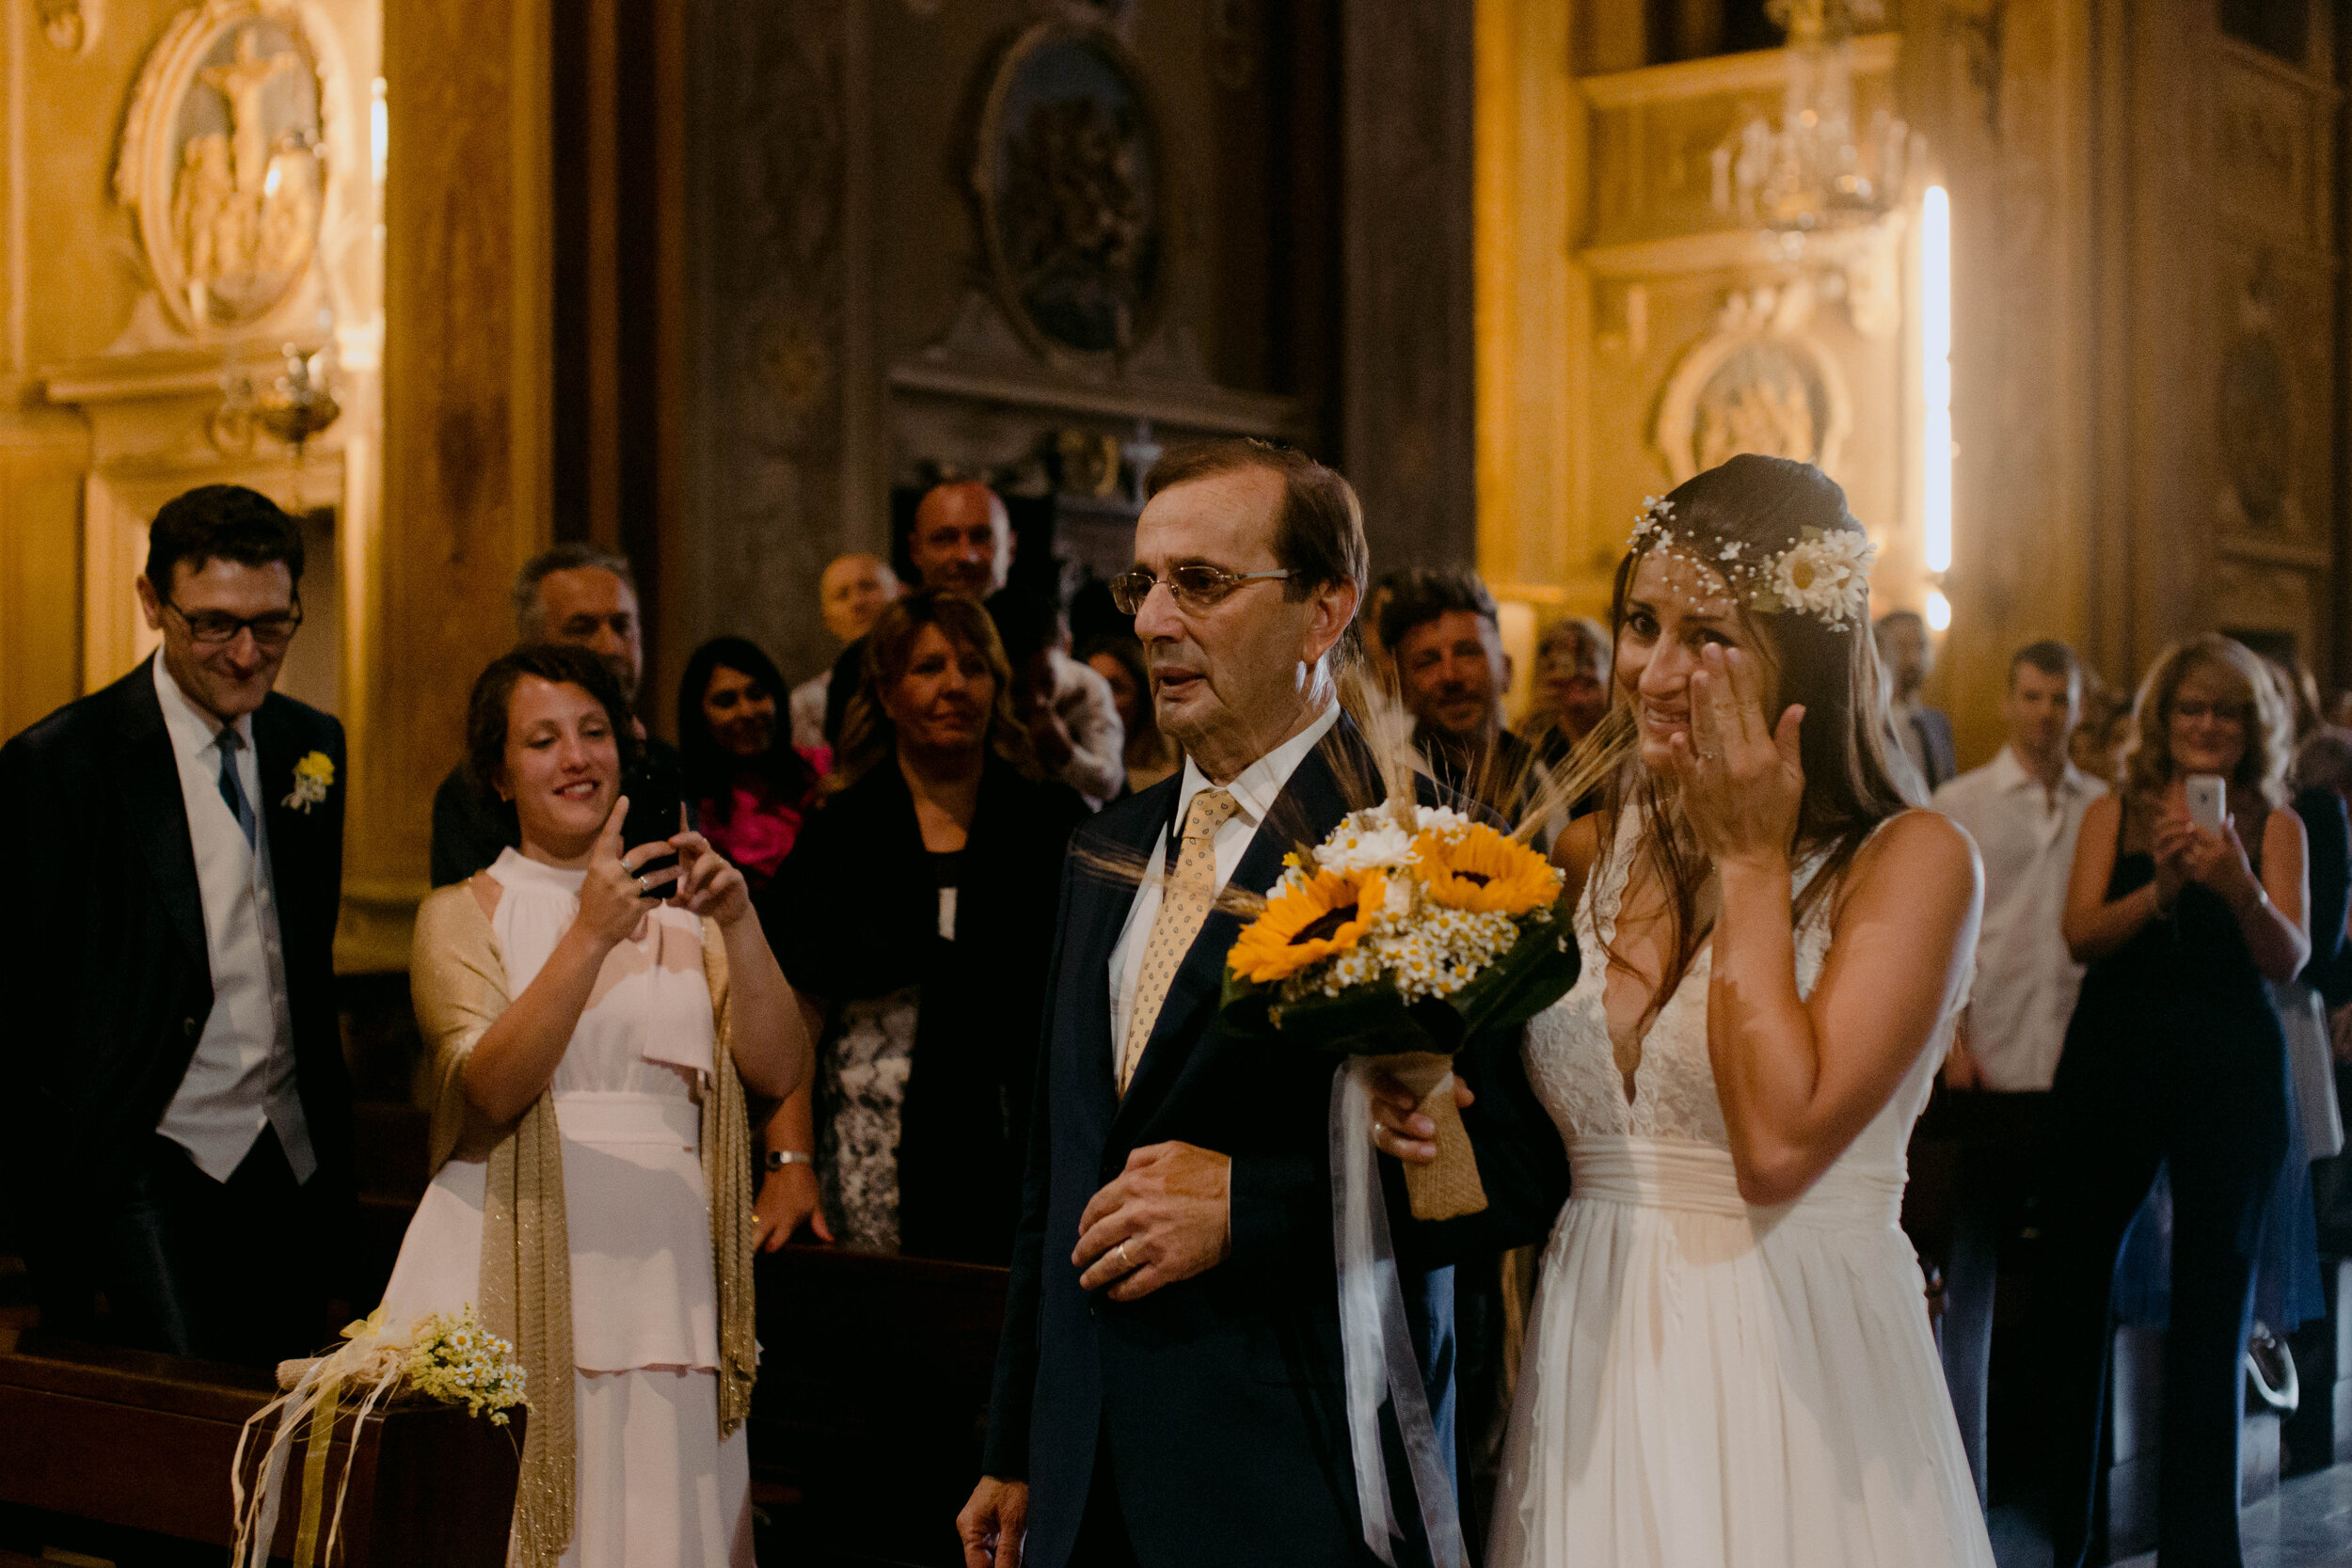 019 - Matrimonio a Cascina Rovet - Biella - Miriam Callegari Fotografa.JPG